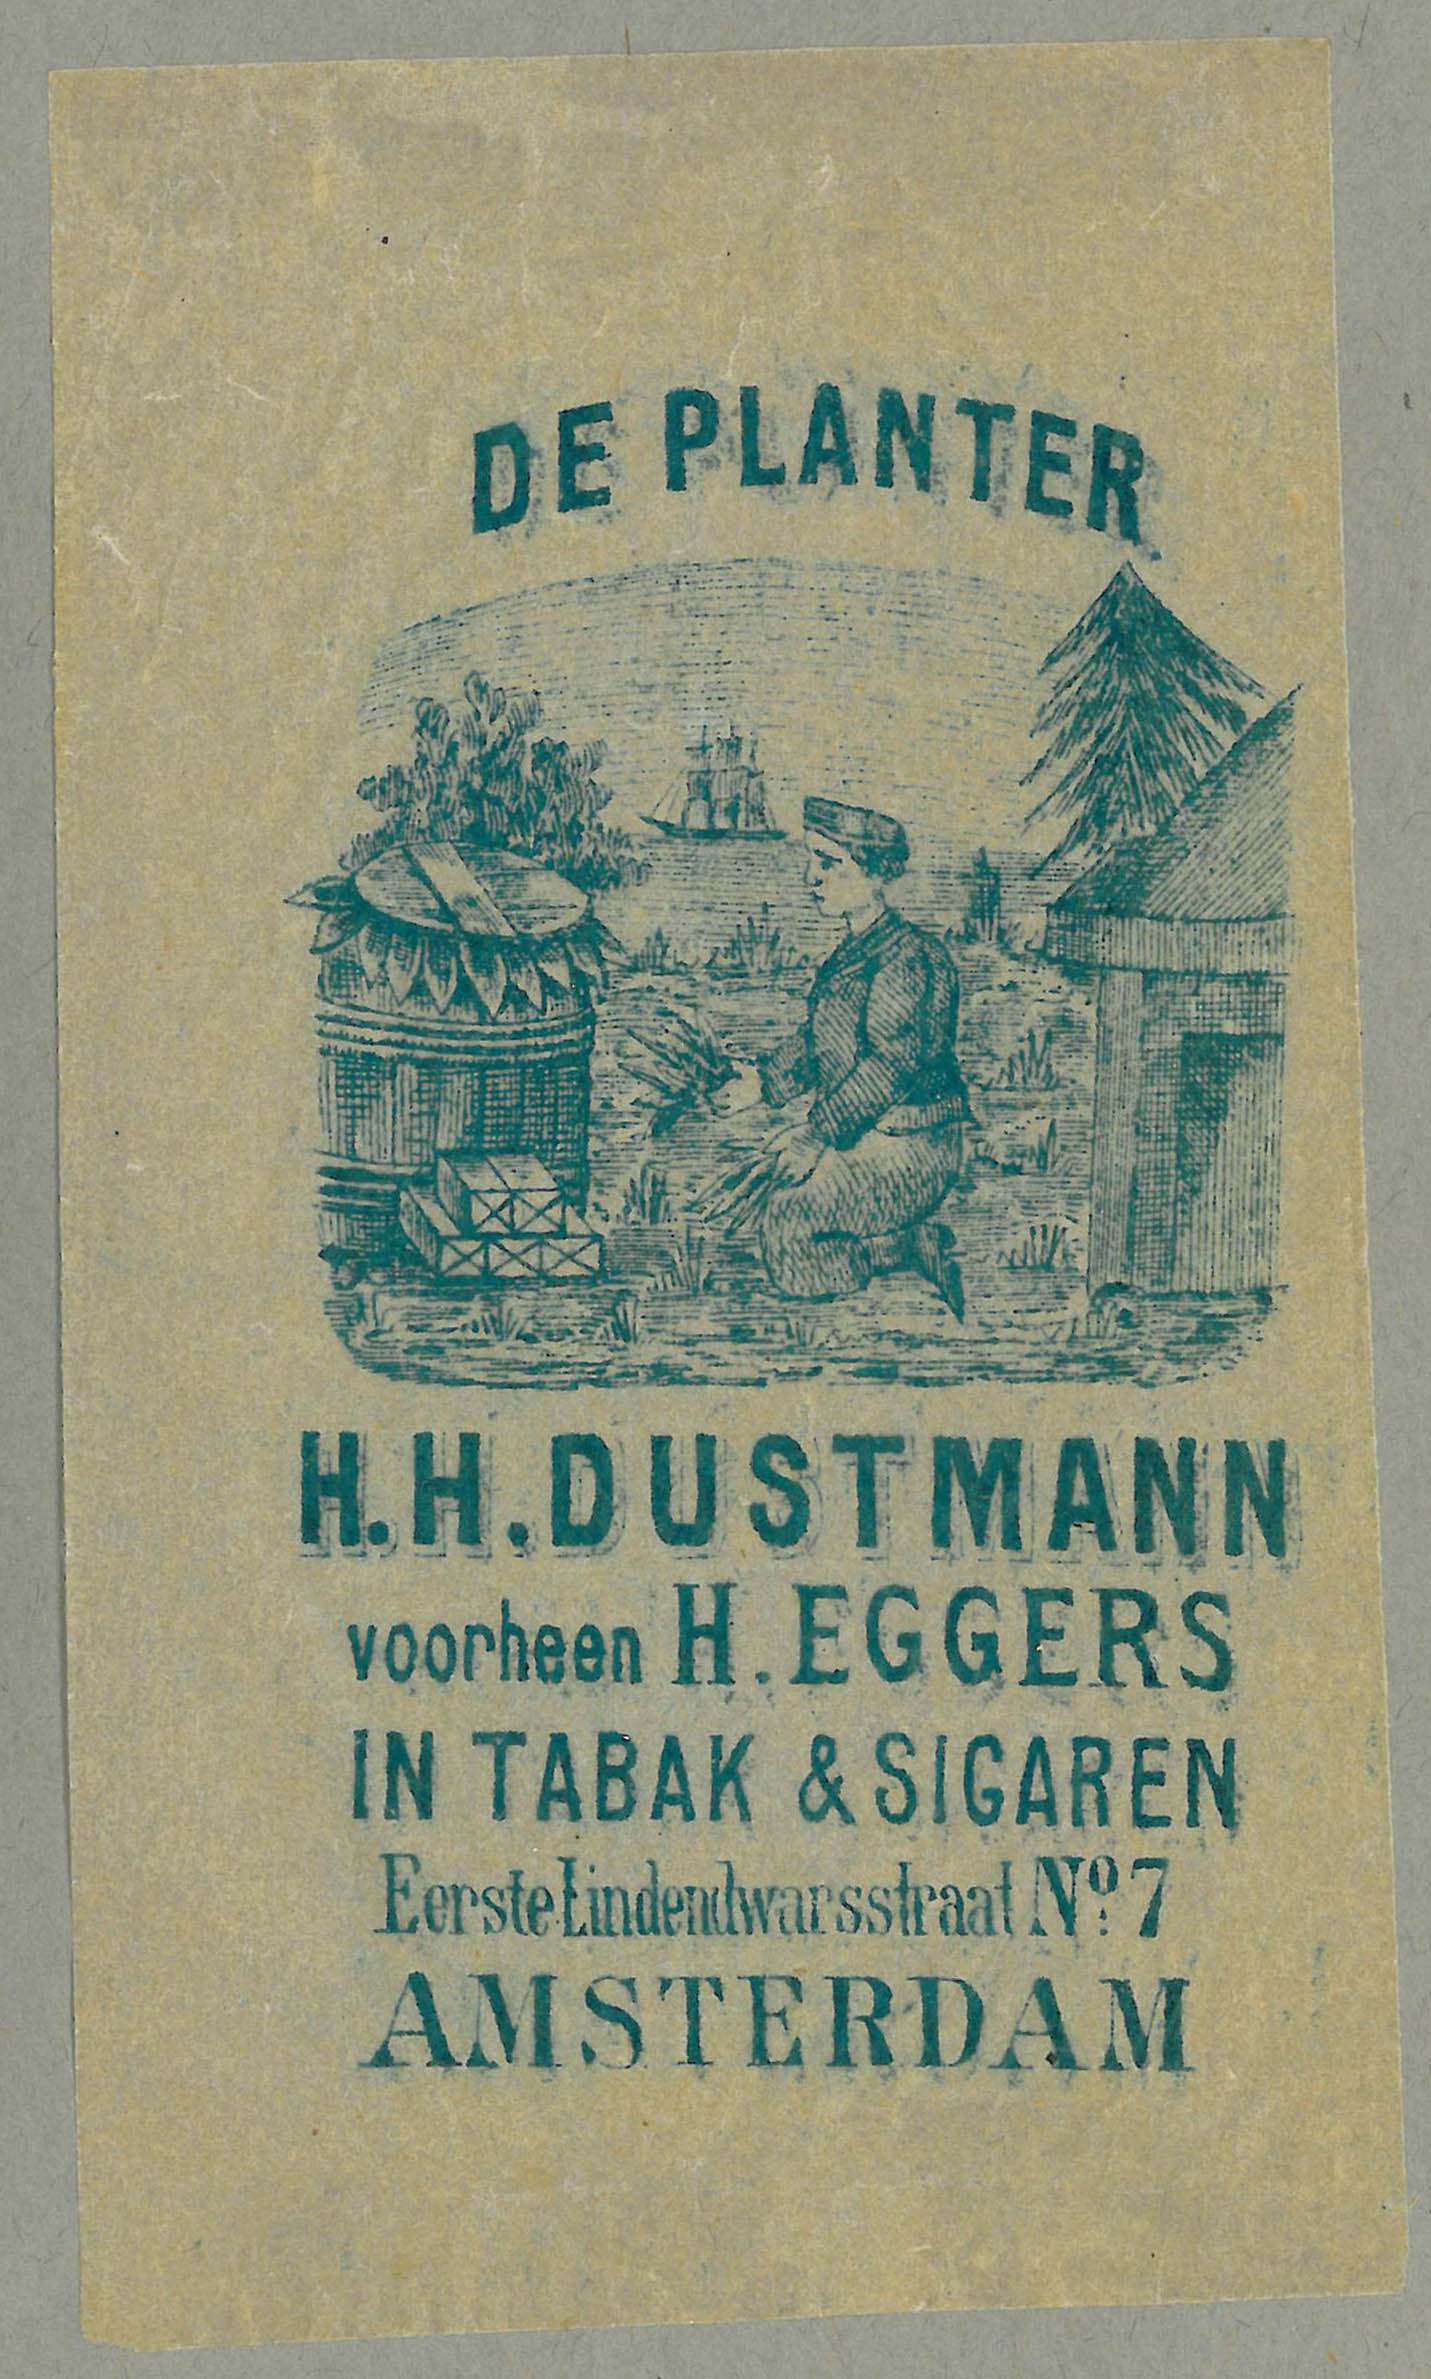 19-26.745-amsterdam-cigar-bag-planter-amsterdam